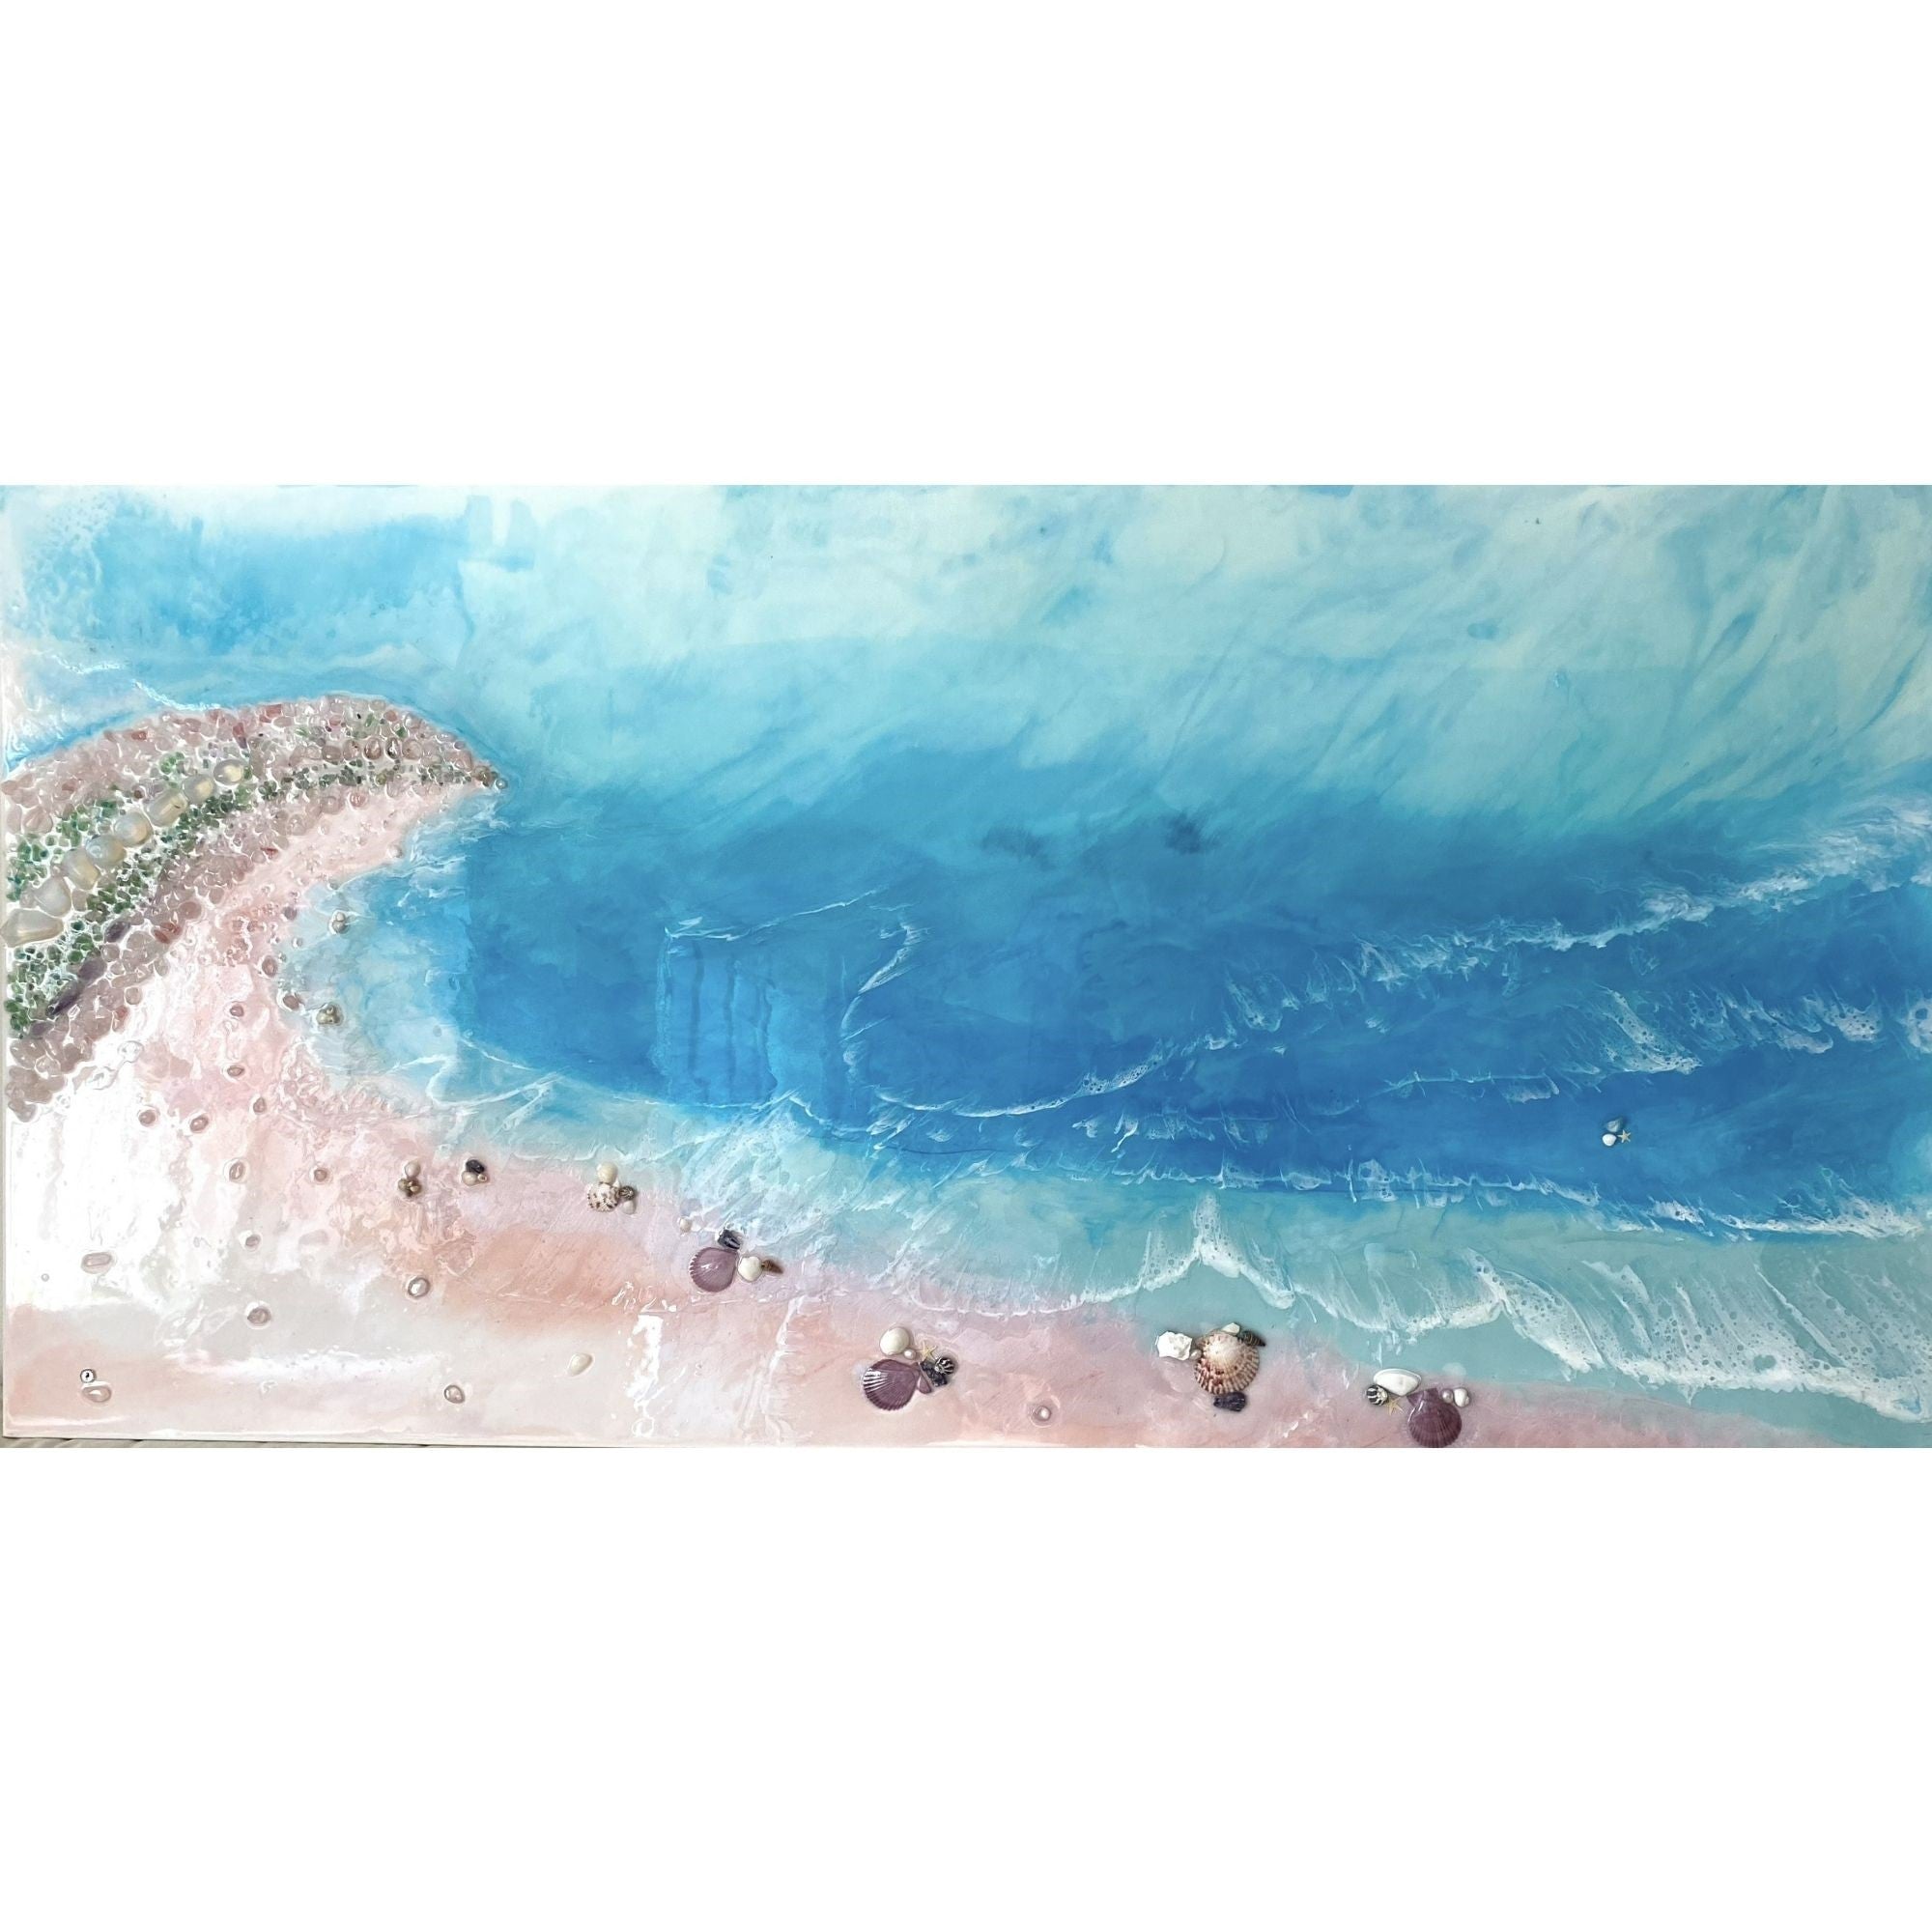 BOUNTY DREAM Bounty Dream Whitsundays - Whitehaven Beach - Heart Reef - Great Barrier Reef  Ocean  blue with roze quartz crystals